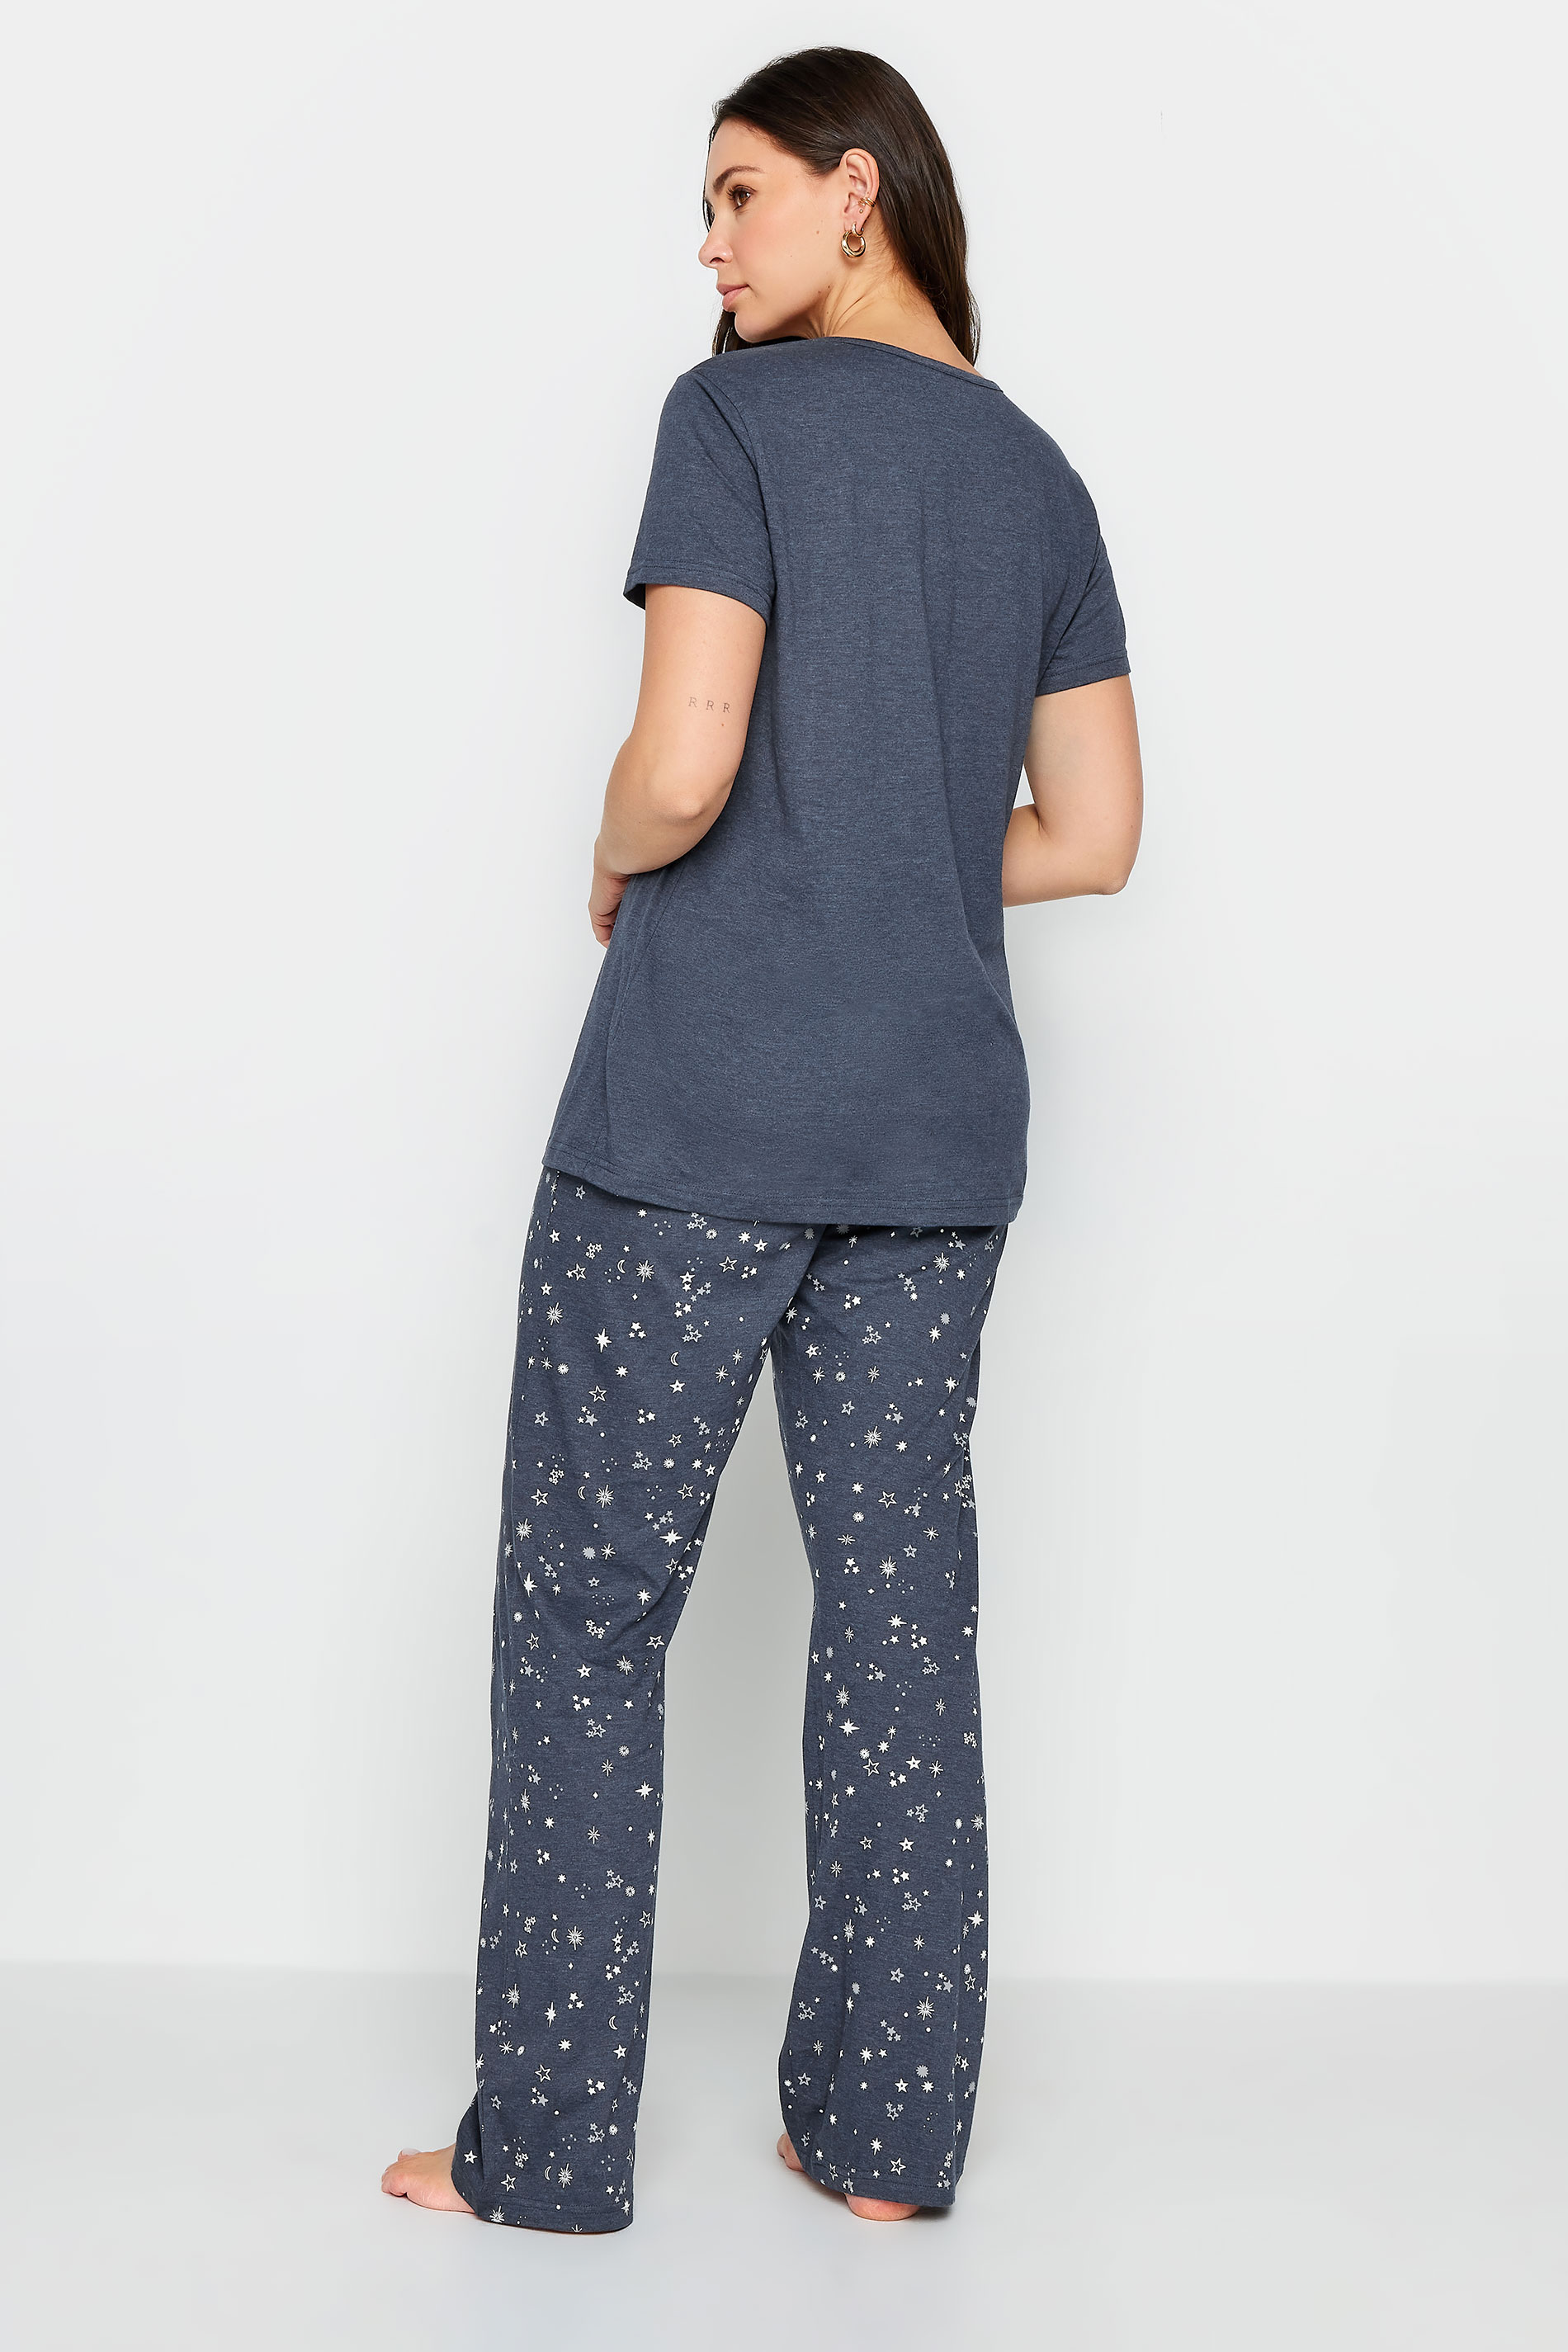 LTS Tall Womens Navy Blue Star Print Wide Leg Pyjama Set | Long Tall Sally 3